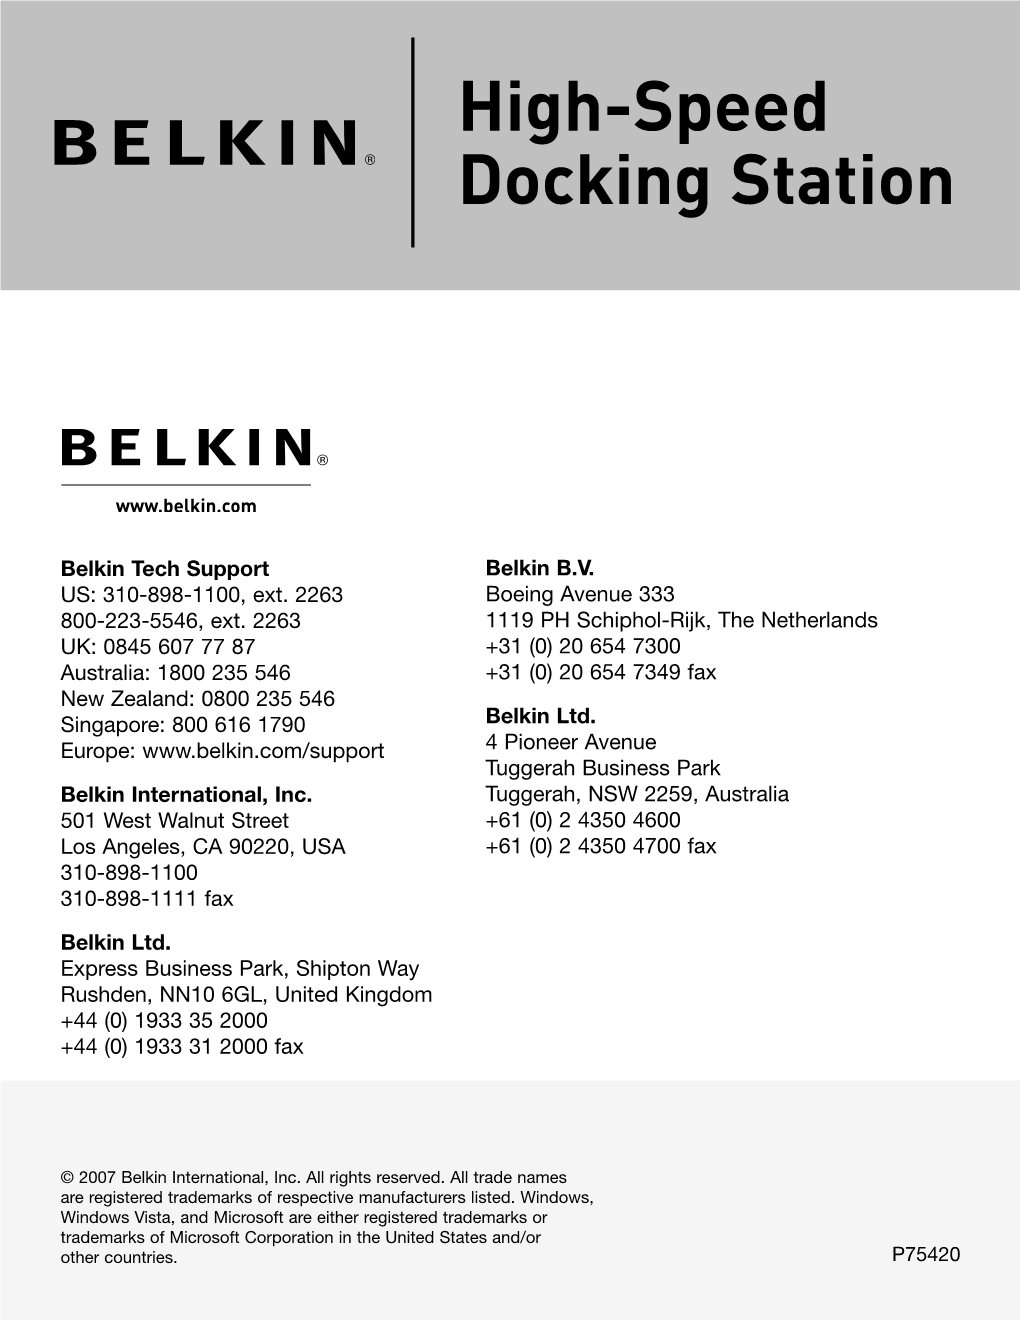 High-Speed Docking Station Docking Station